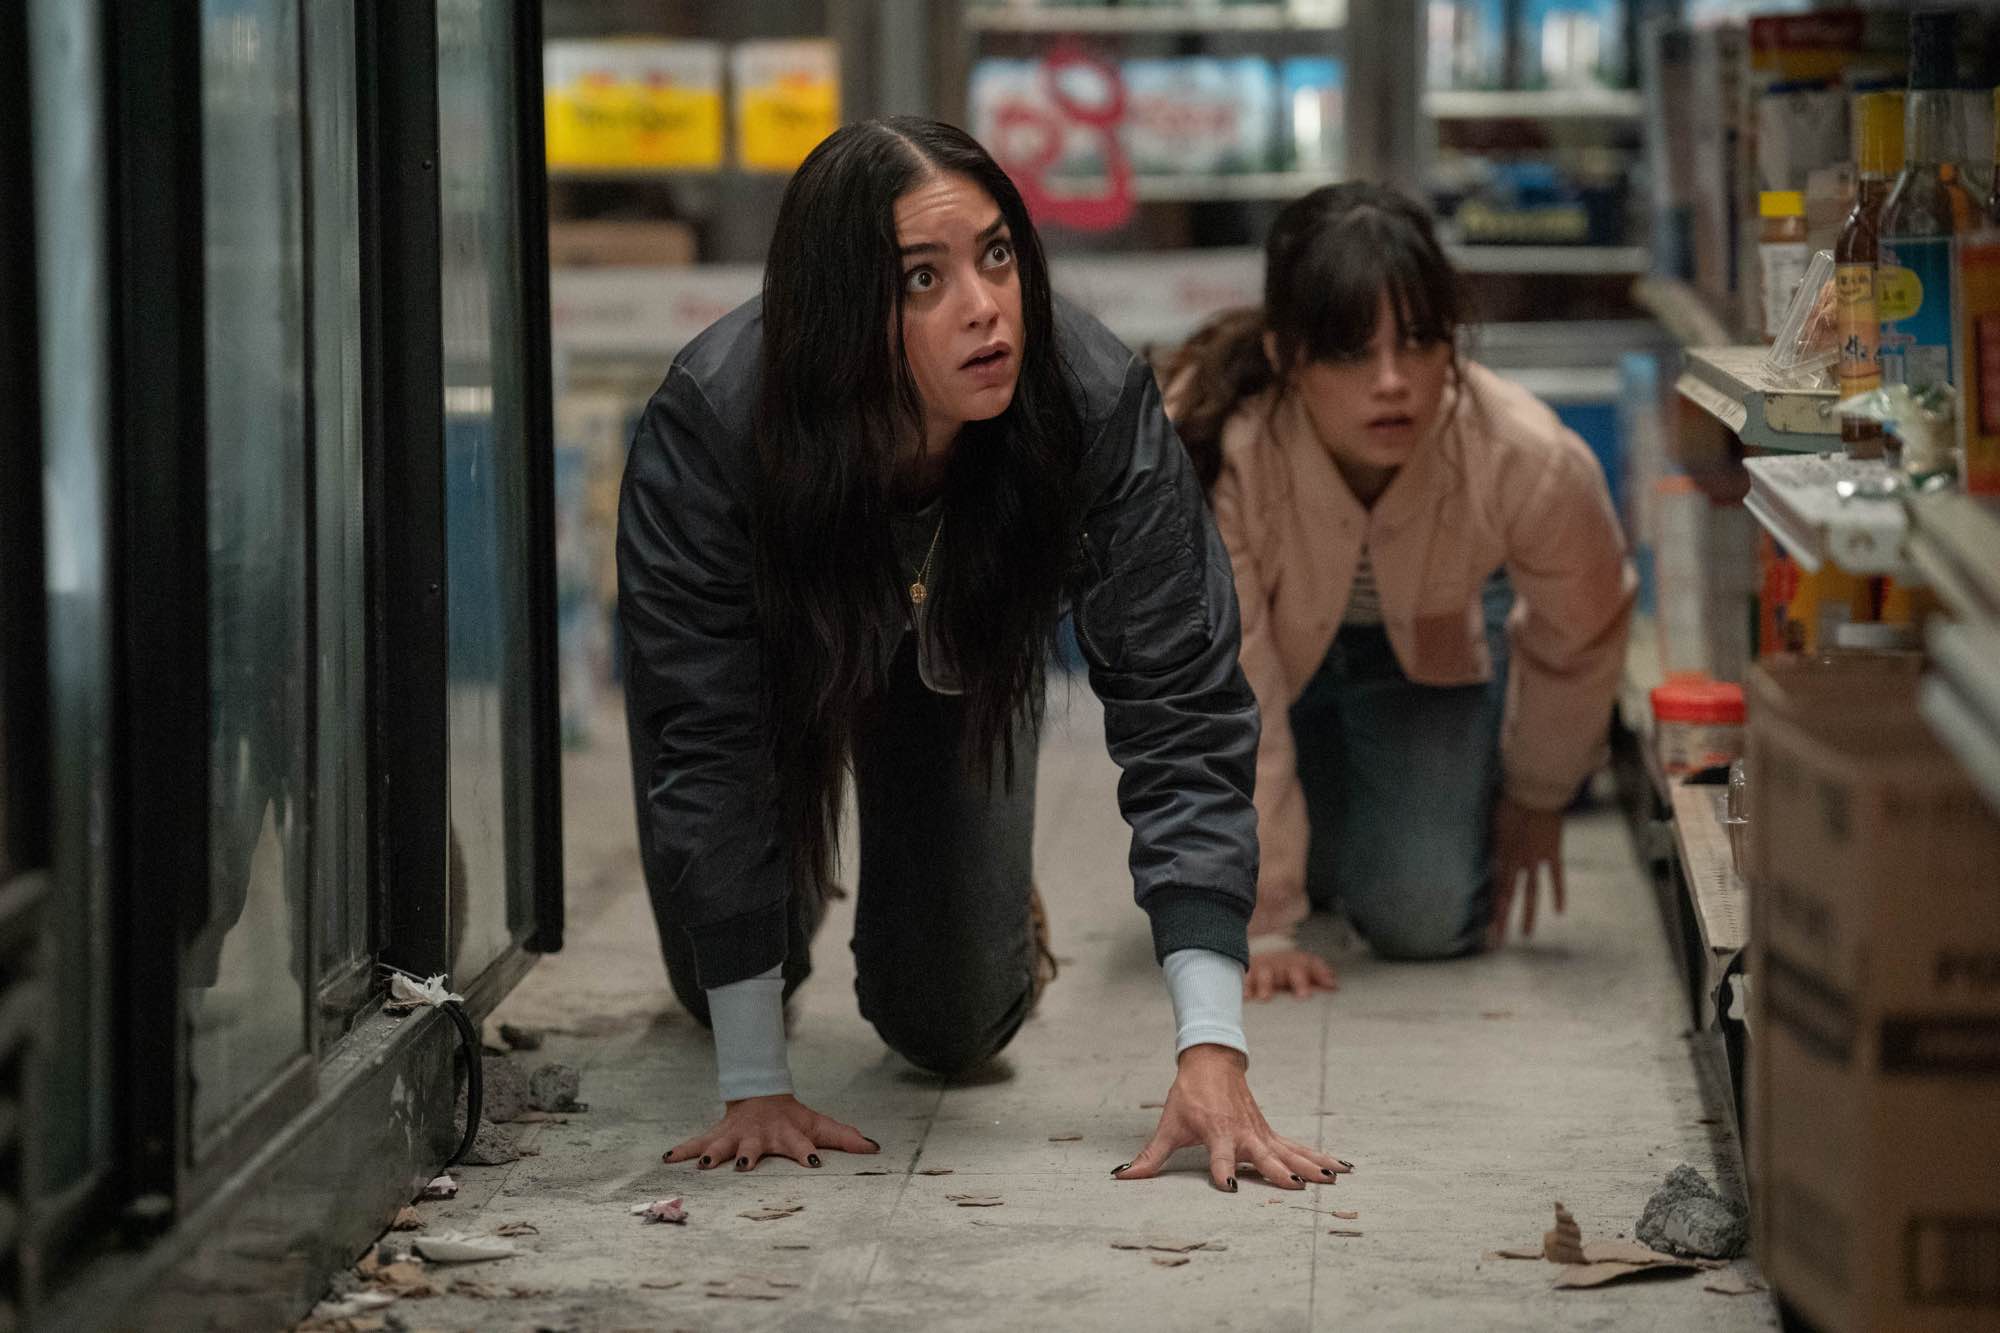 'Scream VI' Melissa Barrera as Sam Carpenter and Jenna Ortega as Tara Carpenter on their hands and knees, crawling on the floor of a bodega looking terrified.